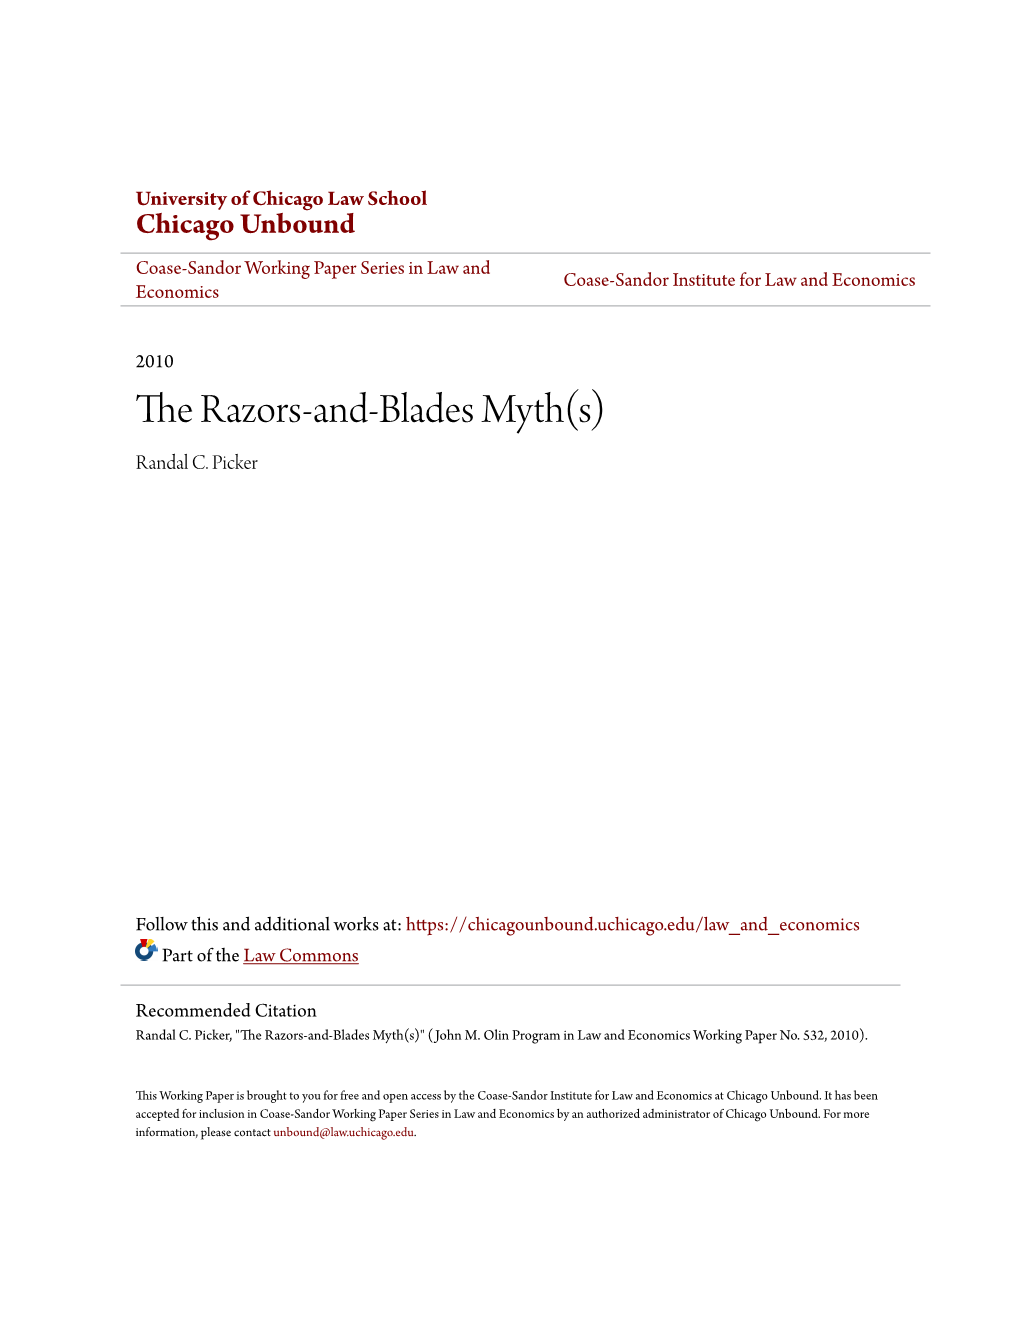 The Razors-And-Blades Myth(S) Randal C